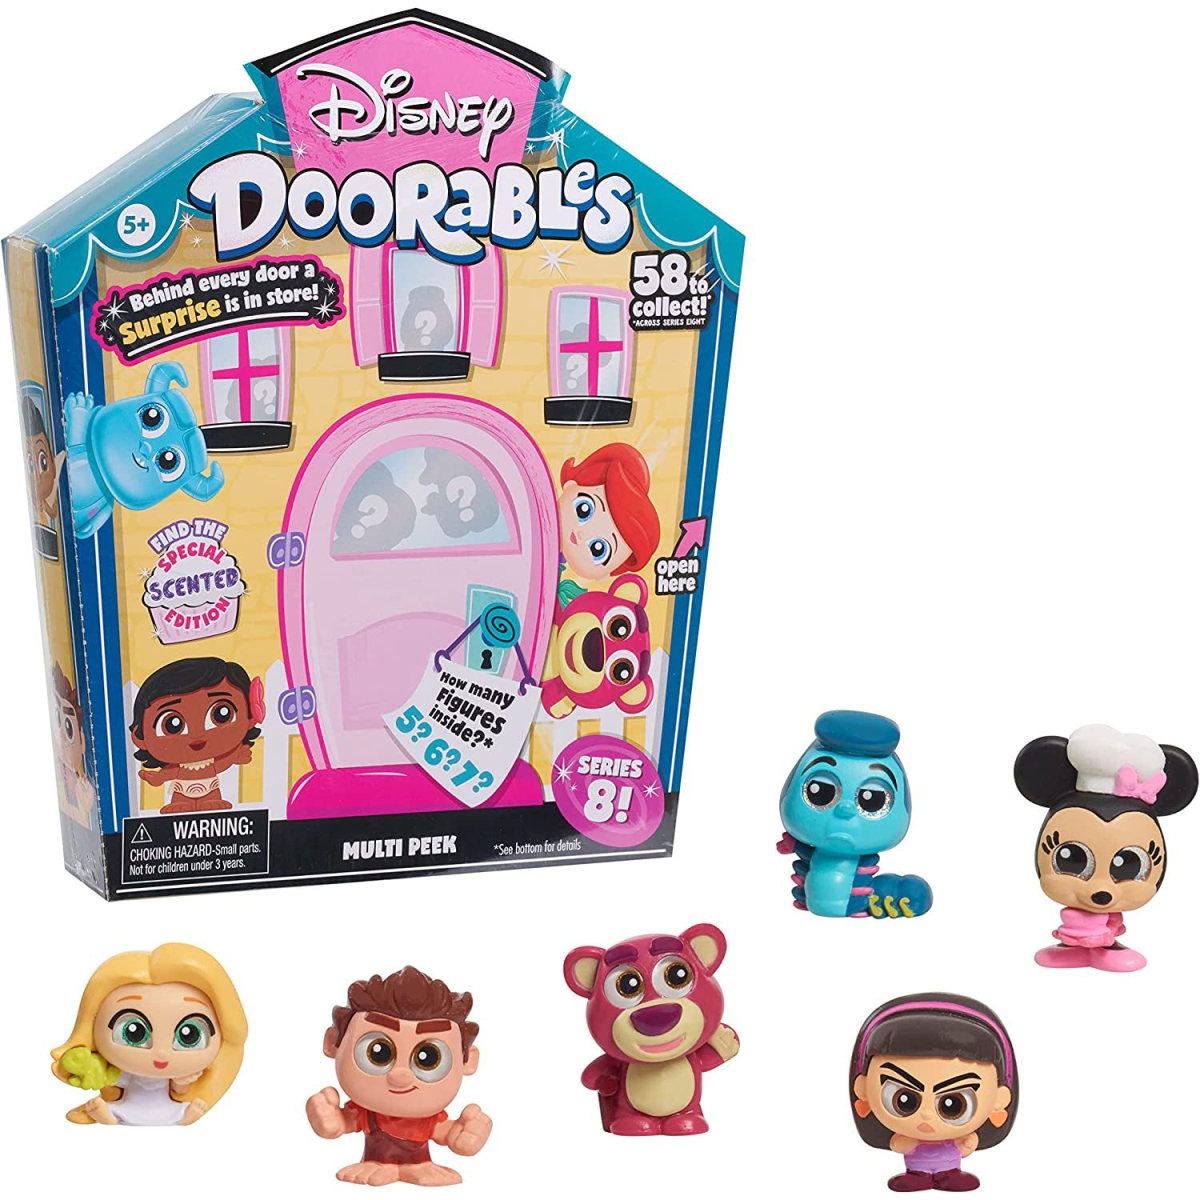 Picture of Disney 30390395 Doorables Multi Peek Series Scented Edition Figures - 8 Piece